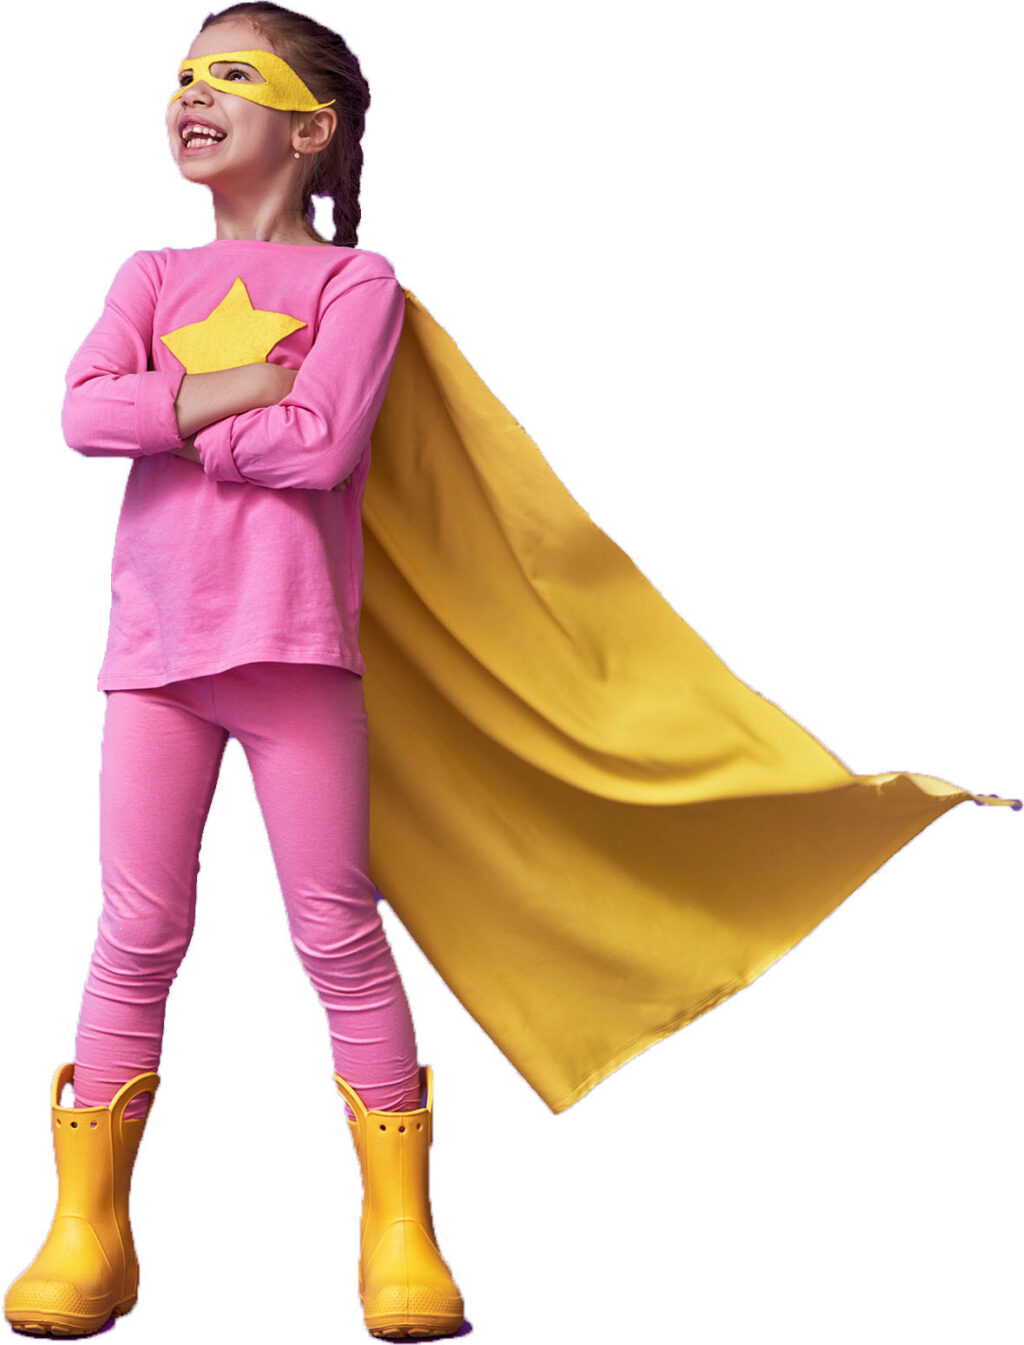 child dressed as super hero